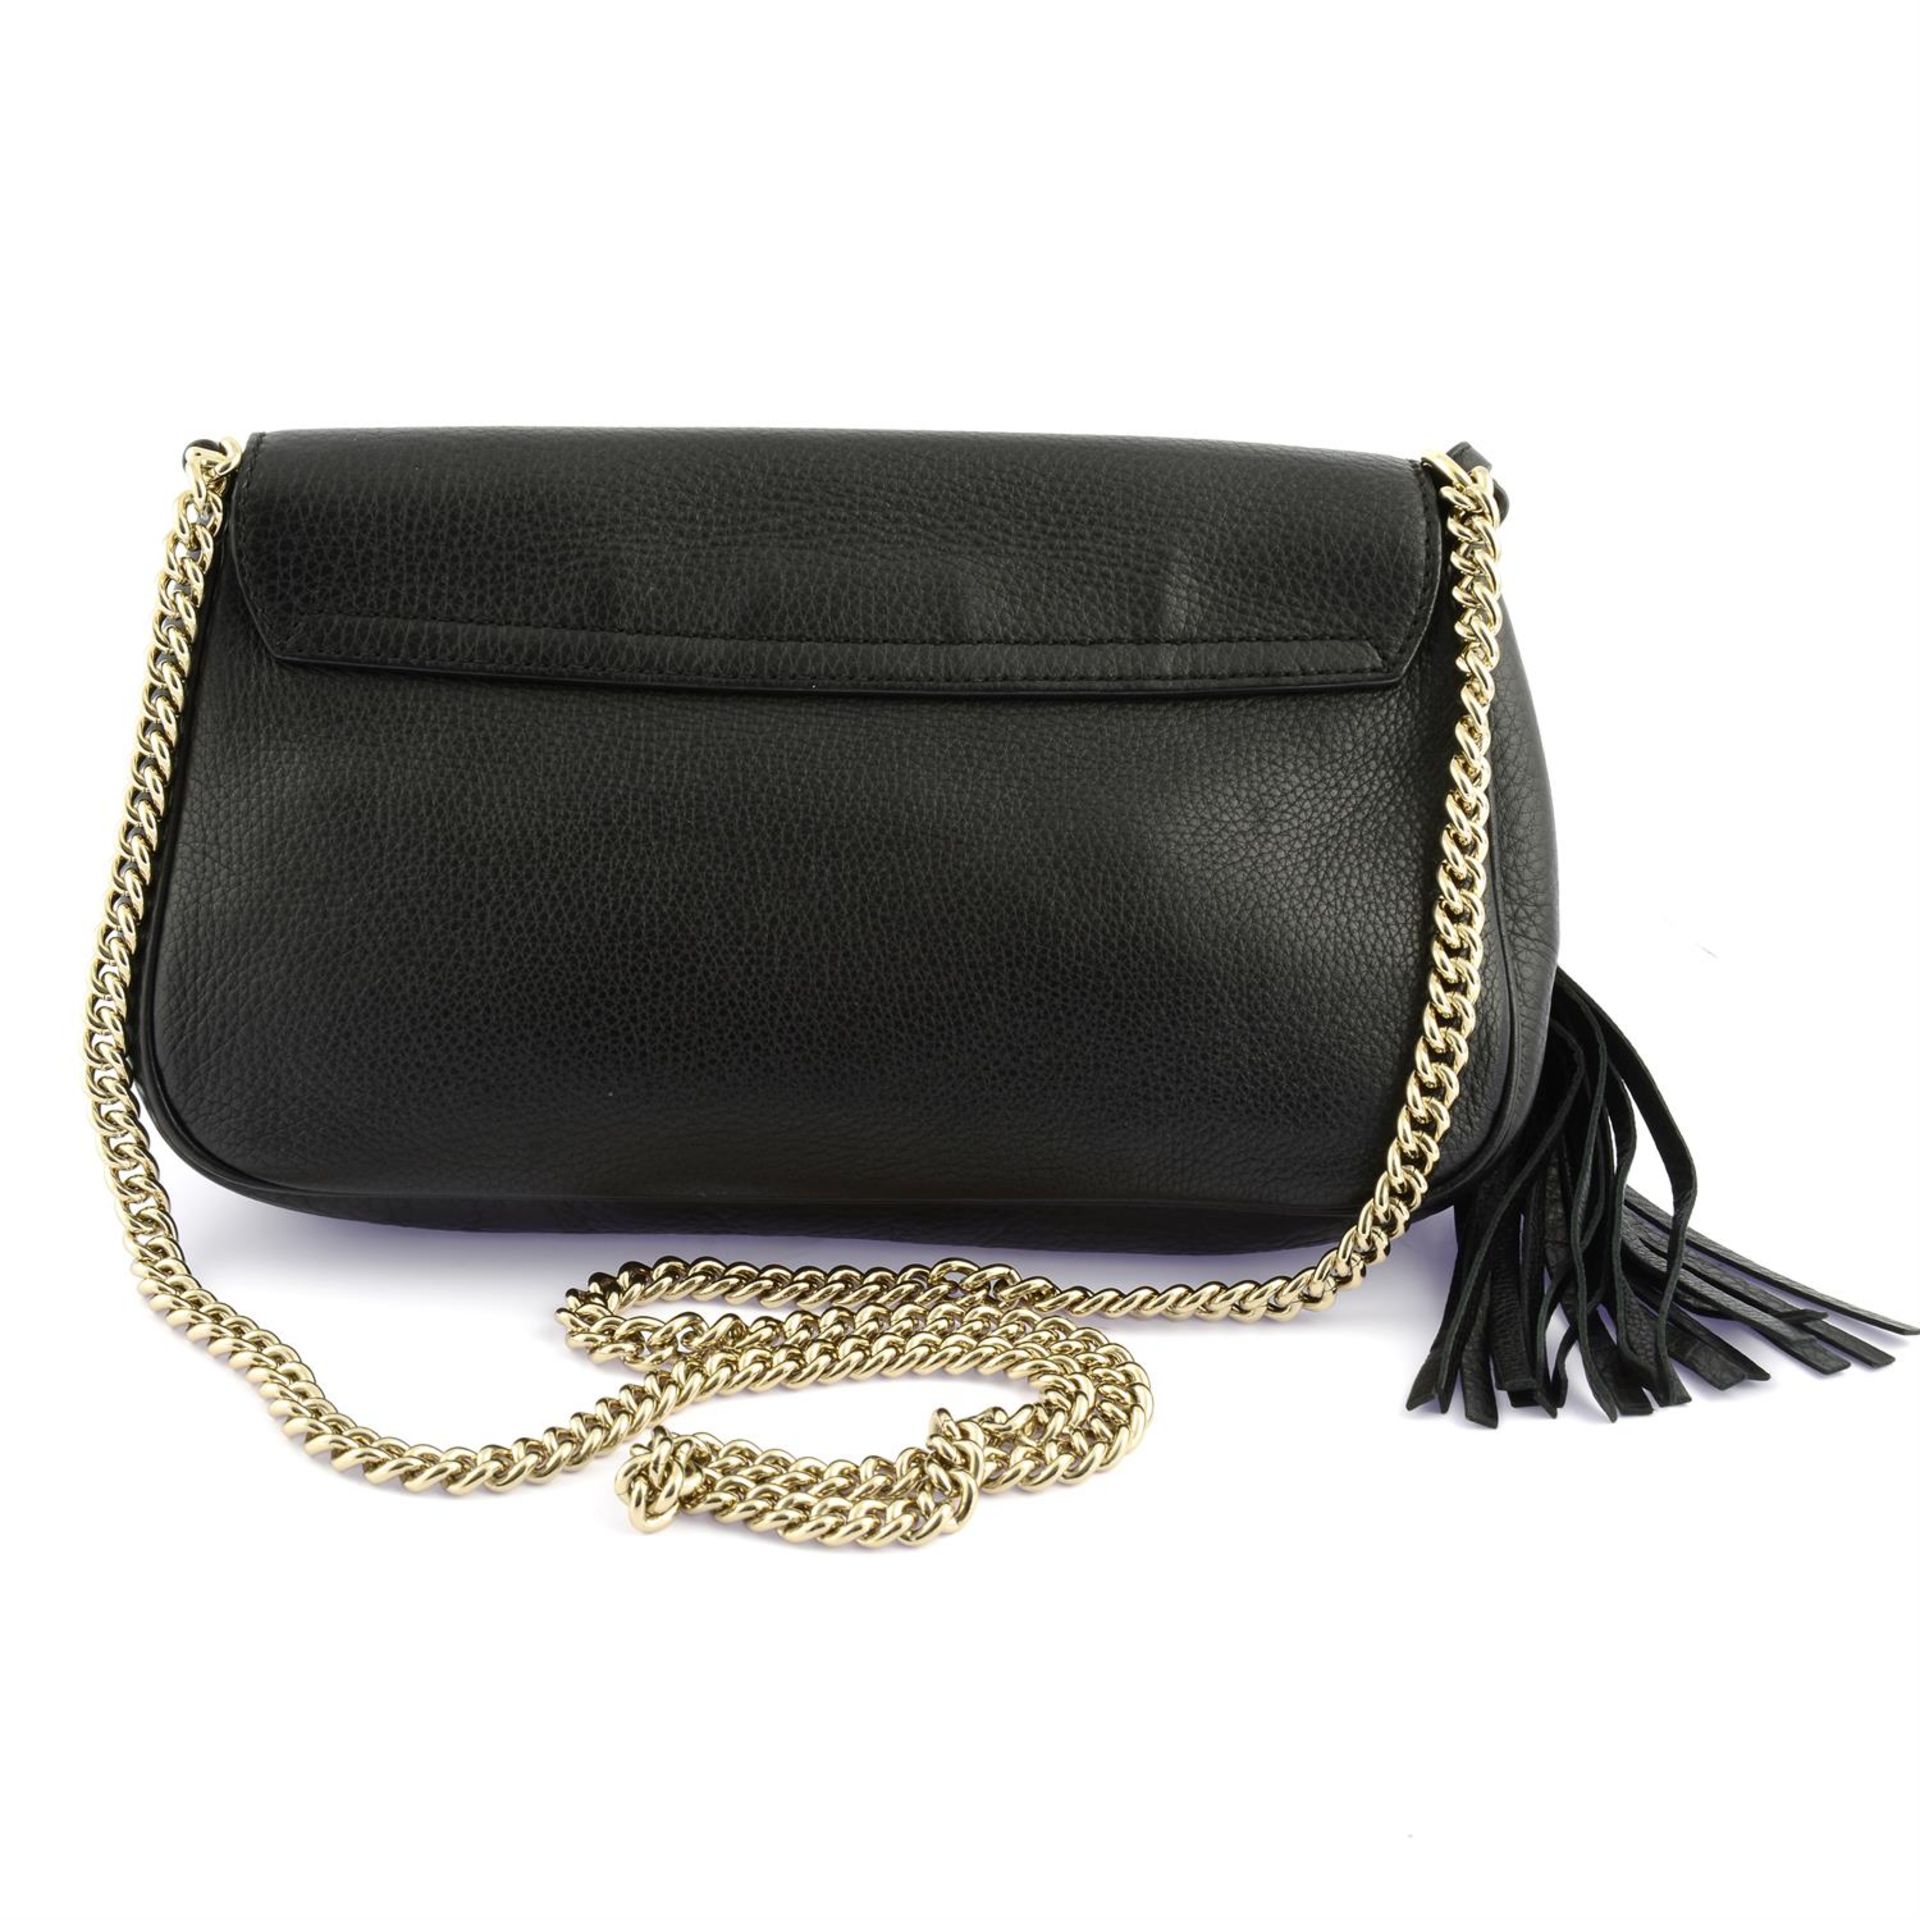 GUCCI - a black leather Soho crossbody bag. - Image 2 of 4